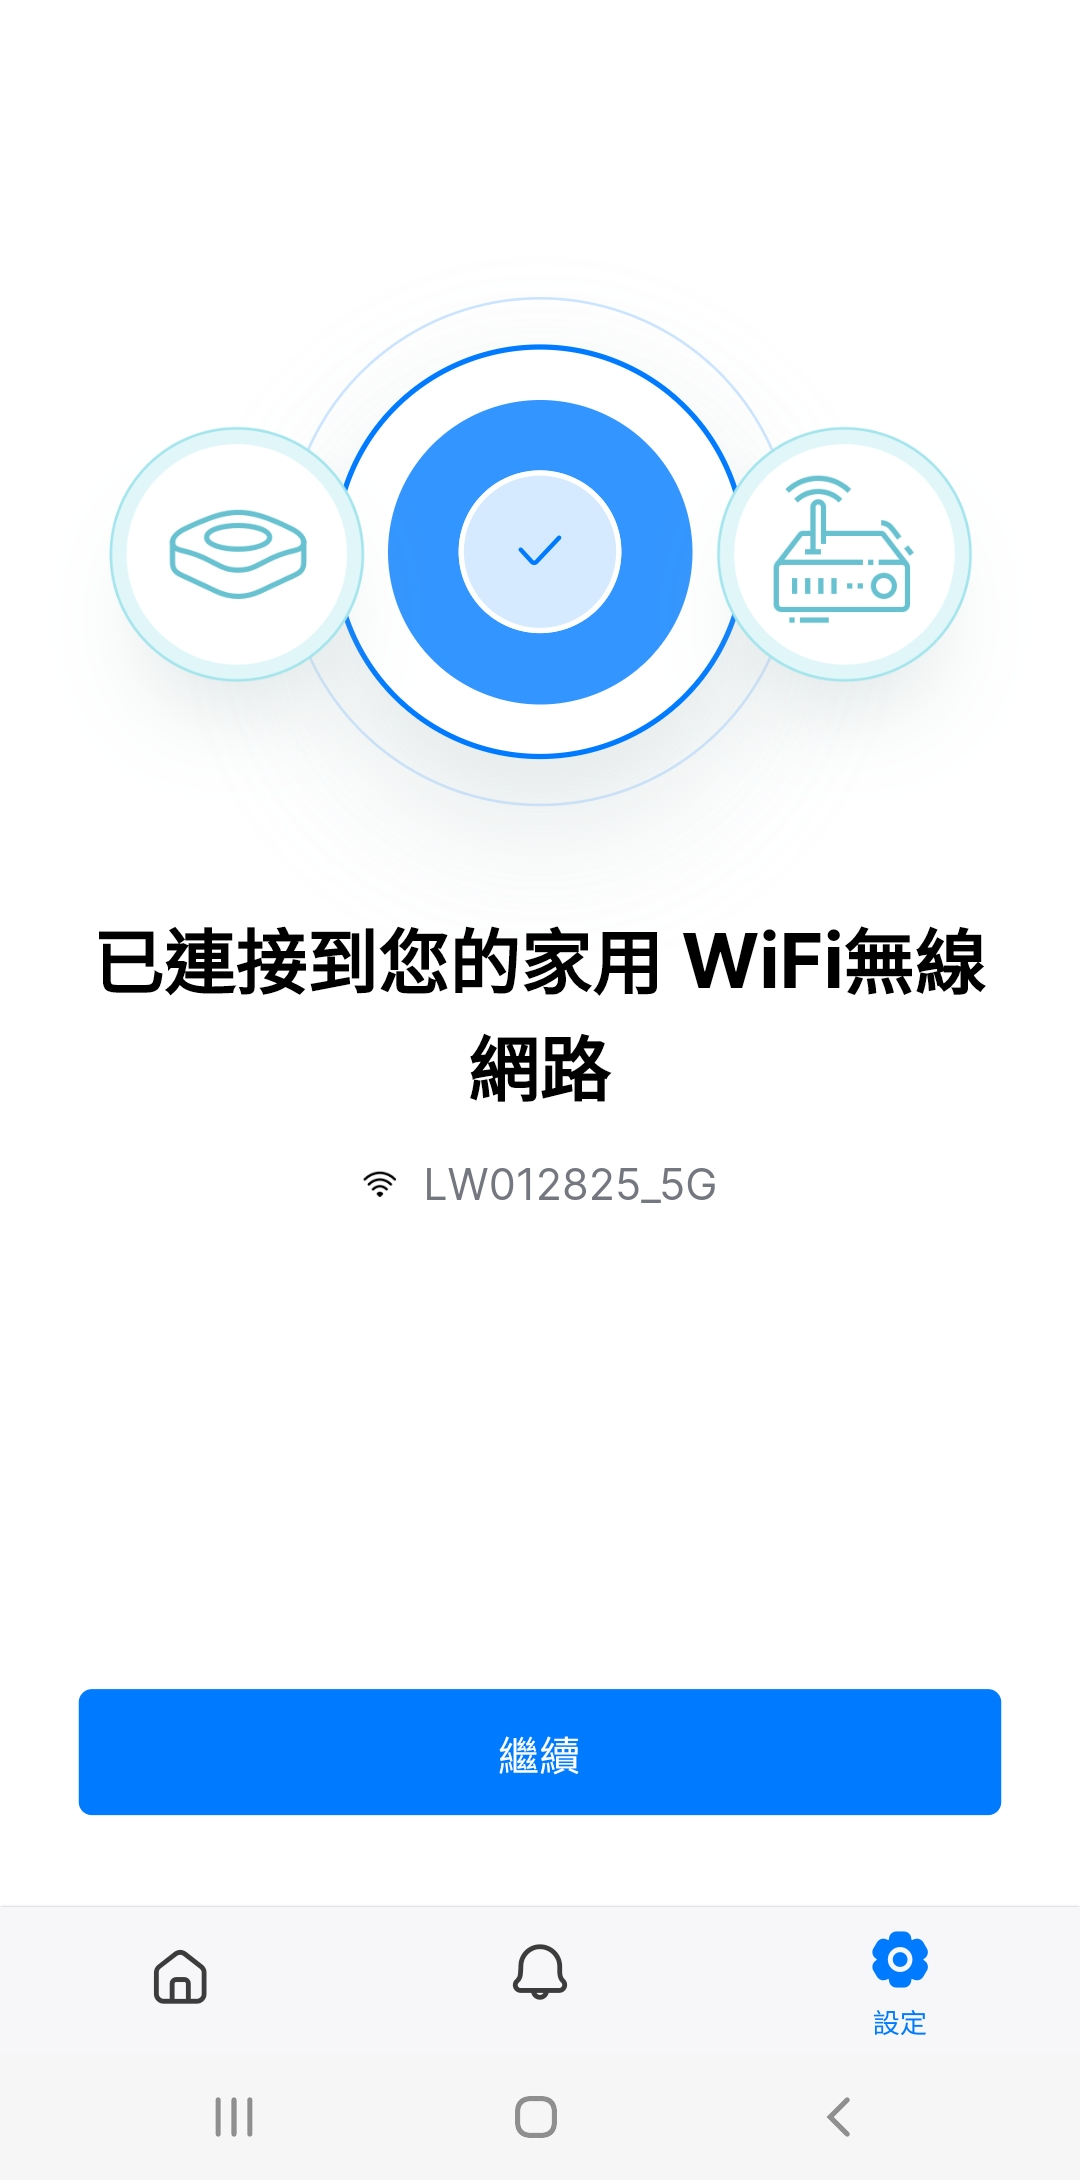 WiFi_C8.png